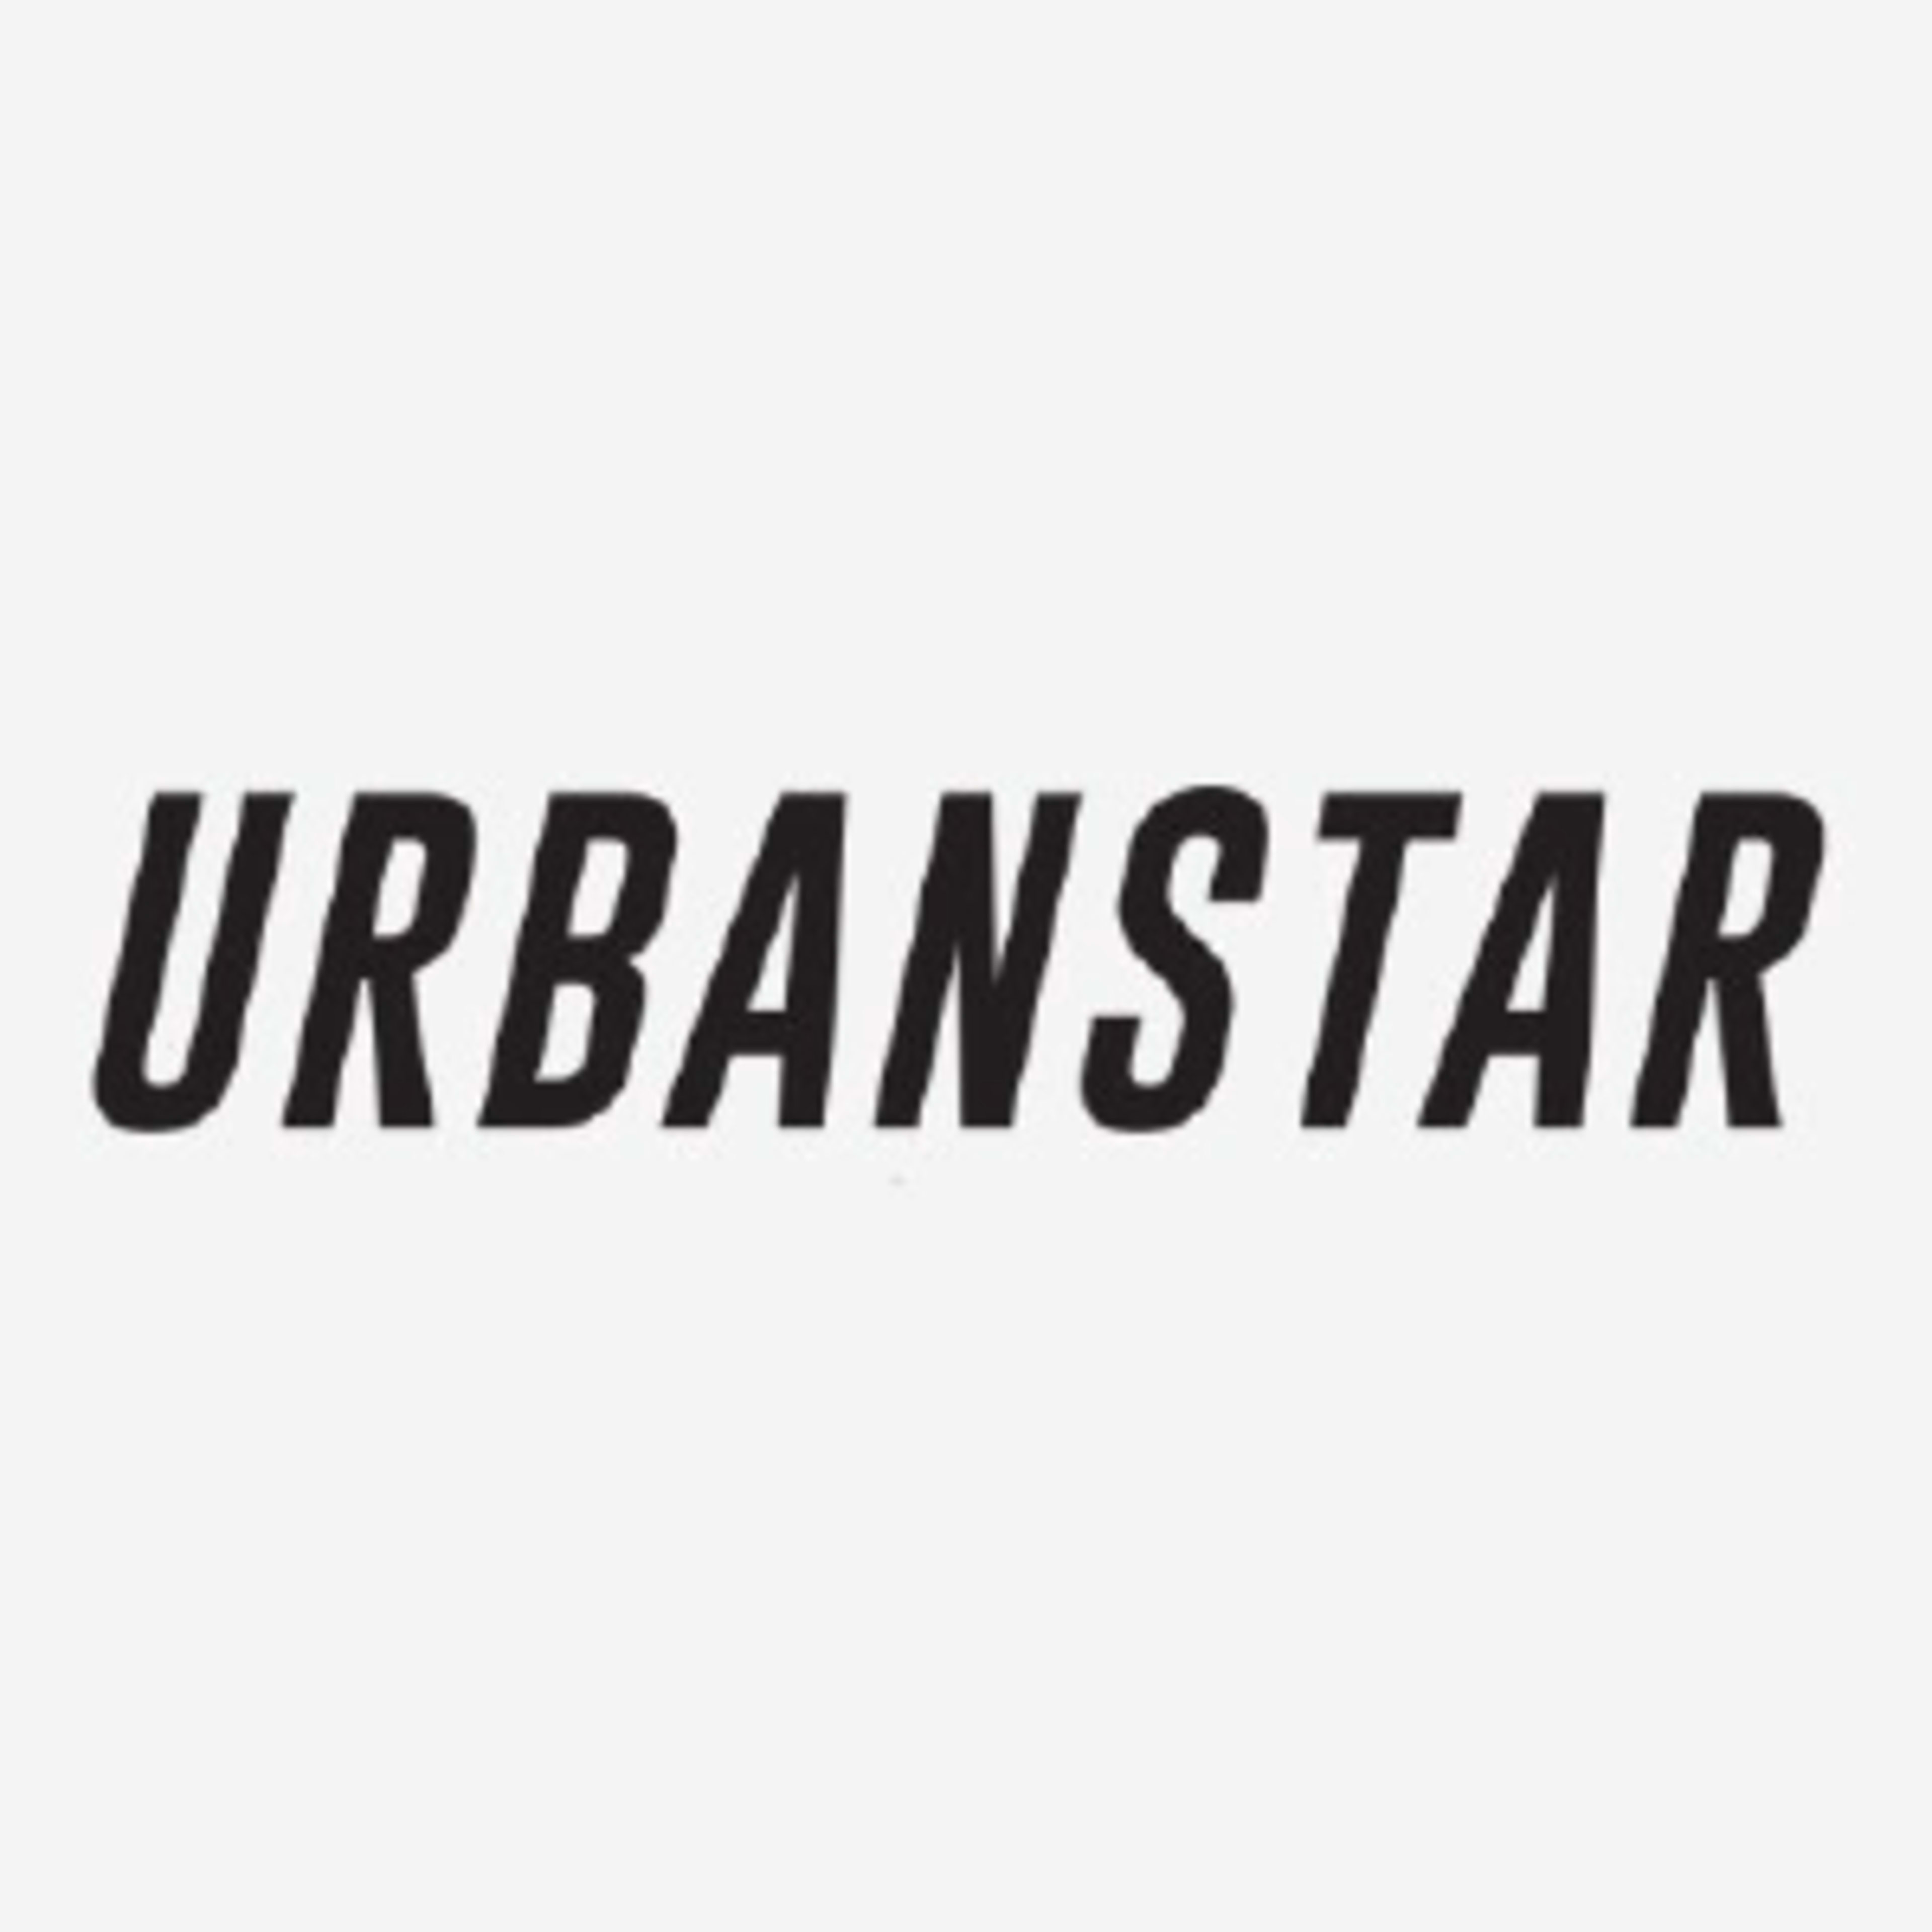 Urbanstar Code